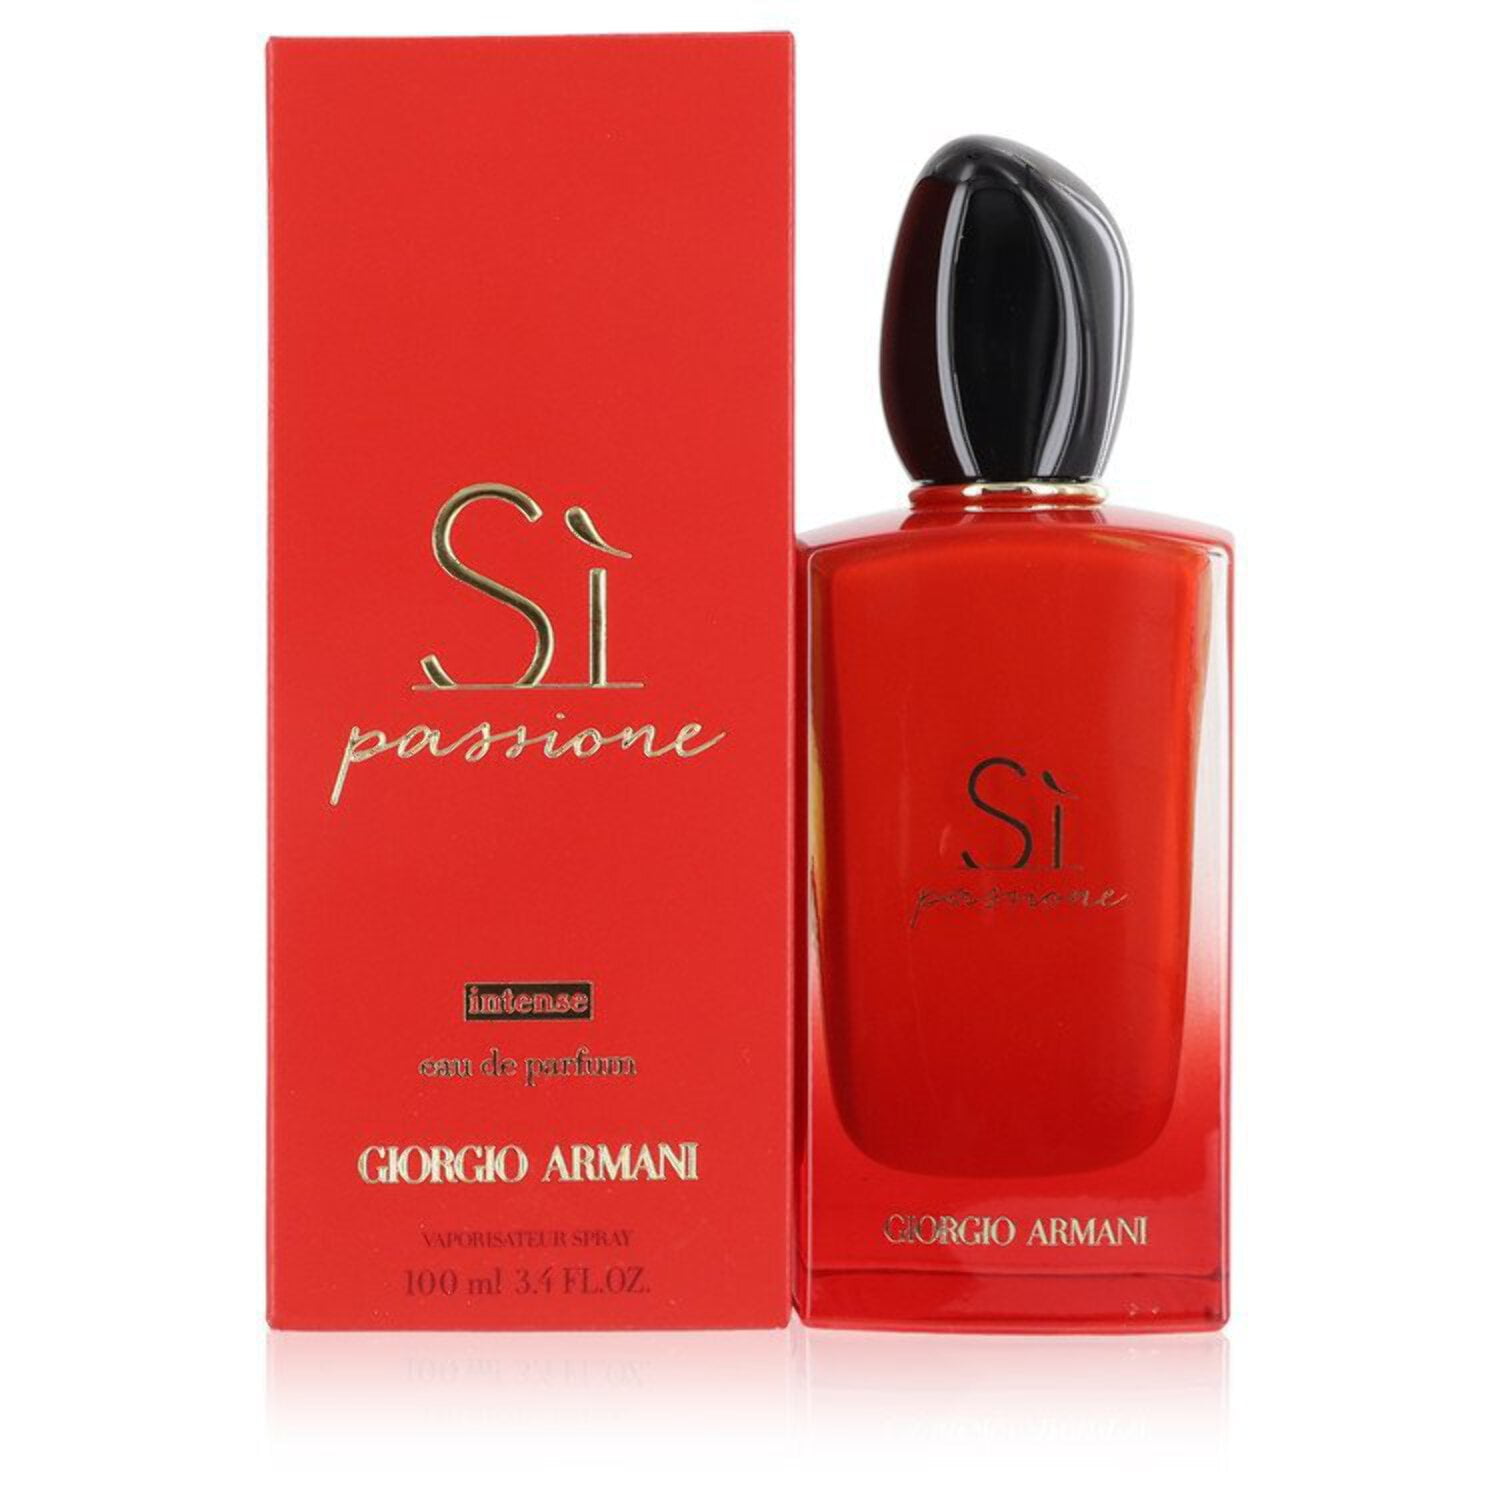 Giorgio Armani - Si Passione Intense Eau De Parfum 50ml/1.7oz - Walmart.com